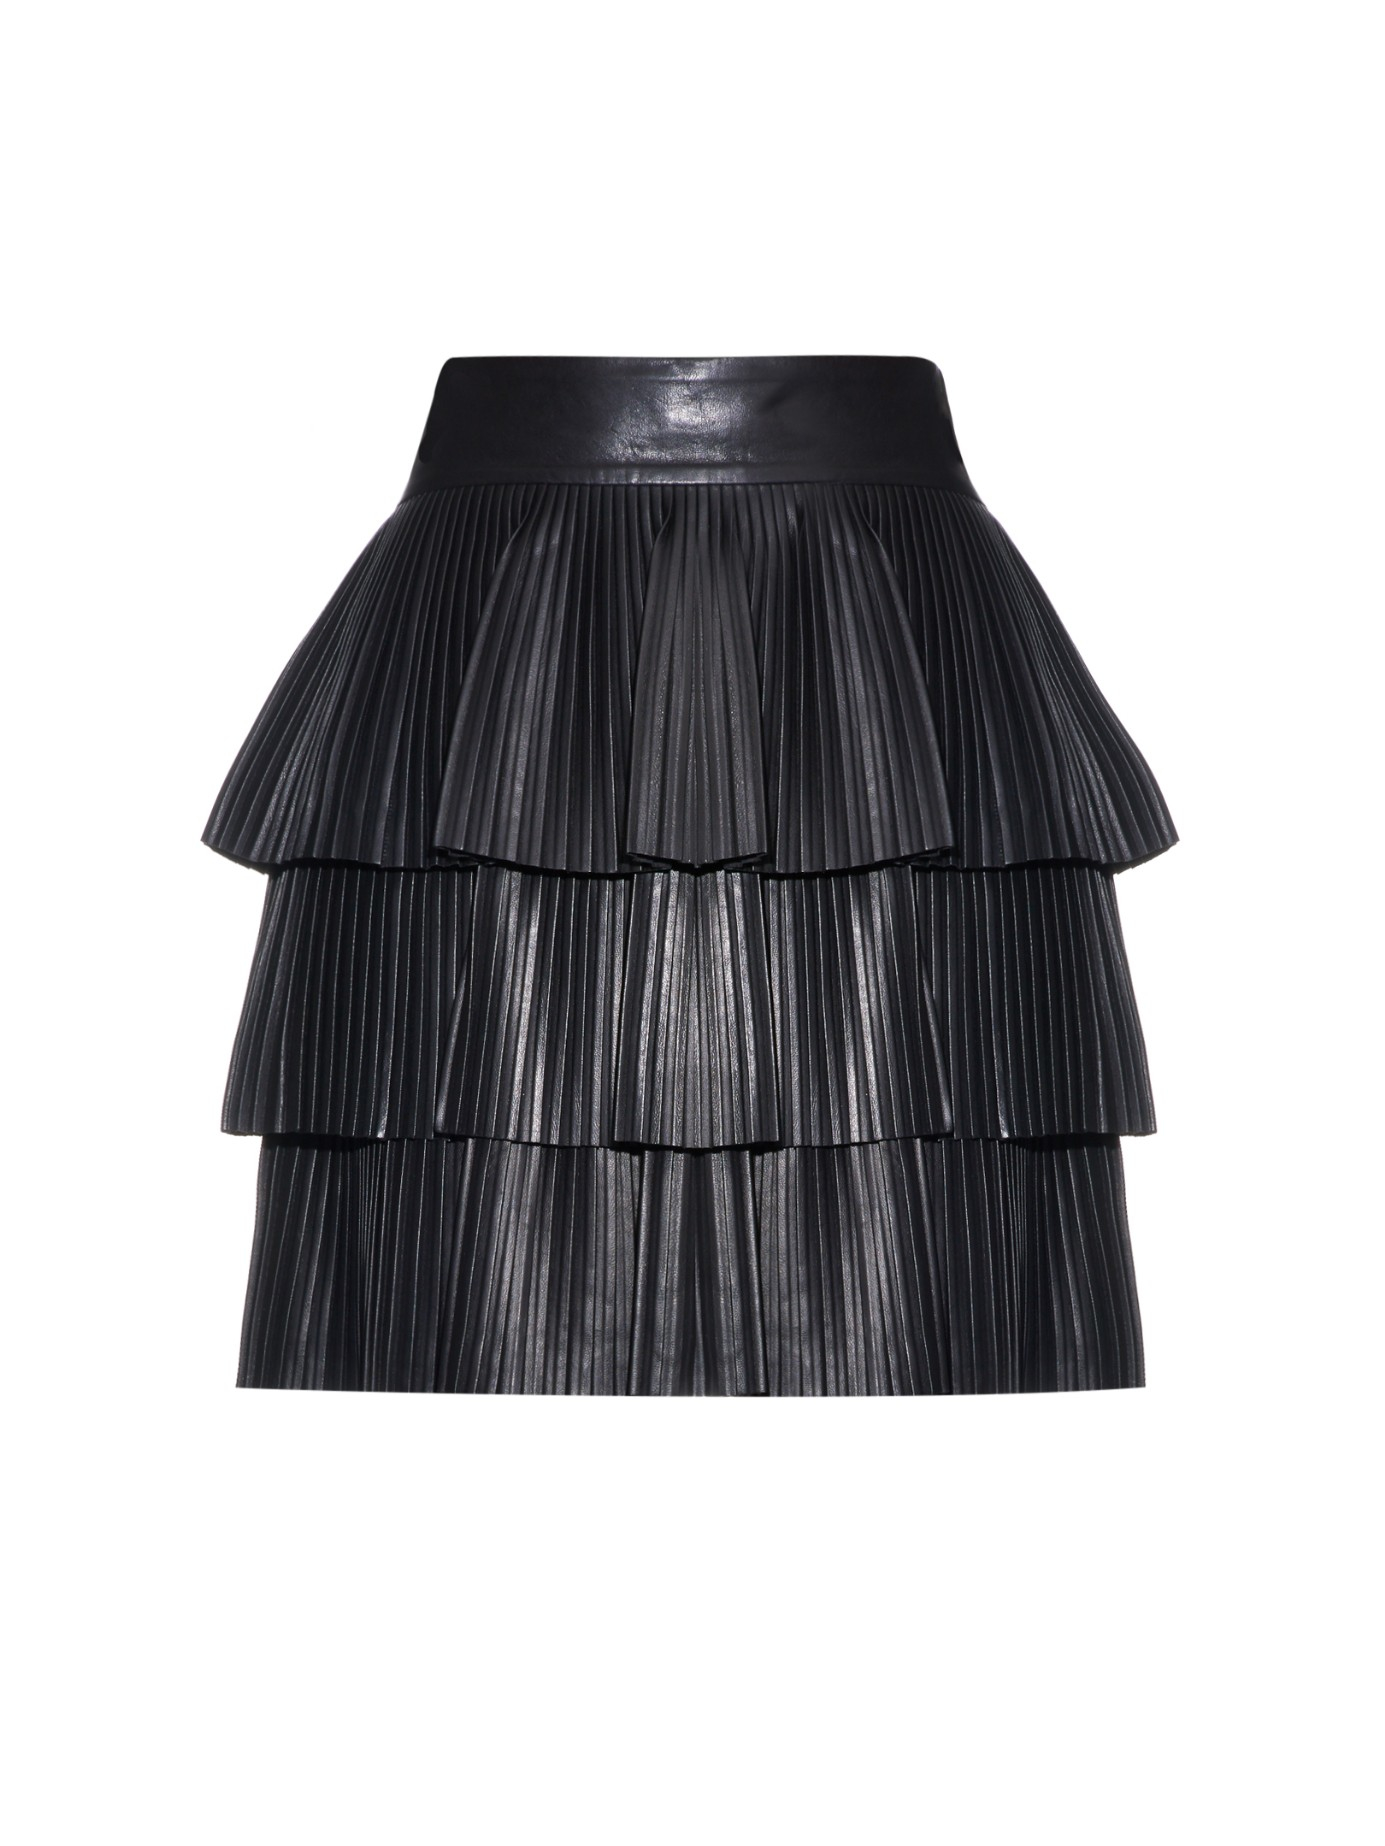 Balmain Pleated-Leather Mini Skirt in Black | Lyst UK